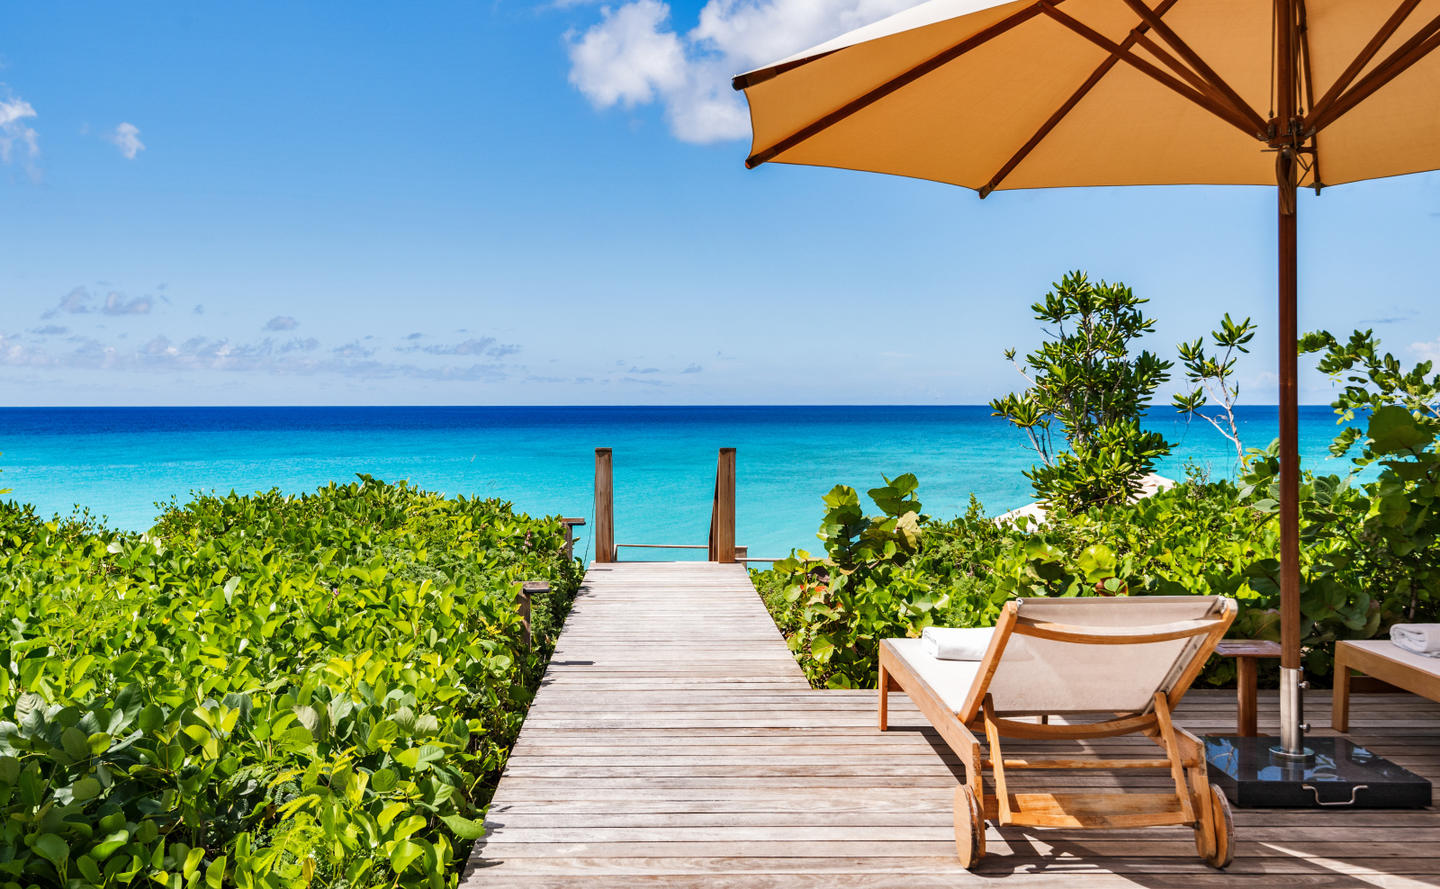 Amanyara, Turks & Caicos - Four Bedroom Beach Sala Villa - Beach Path